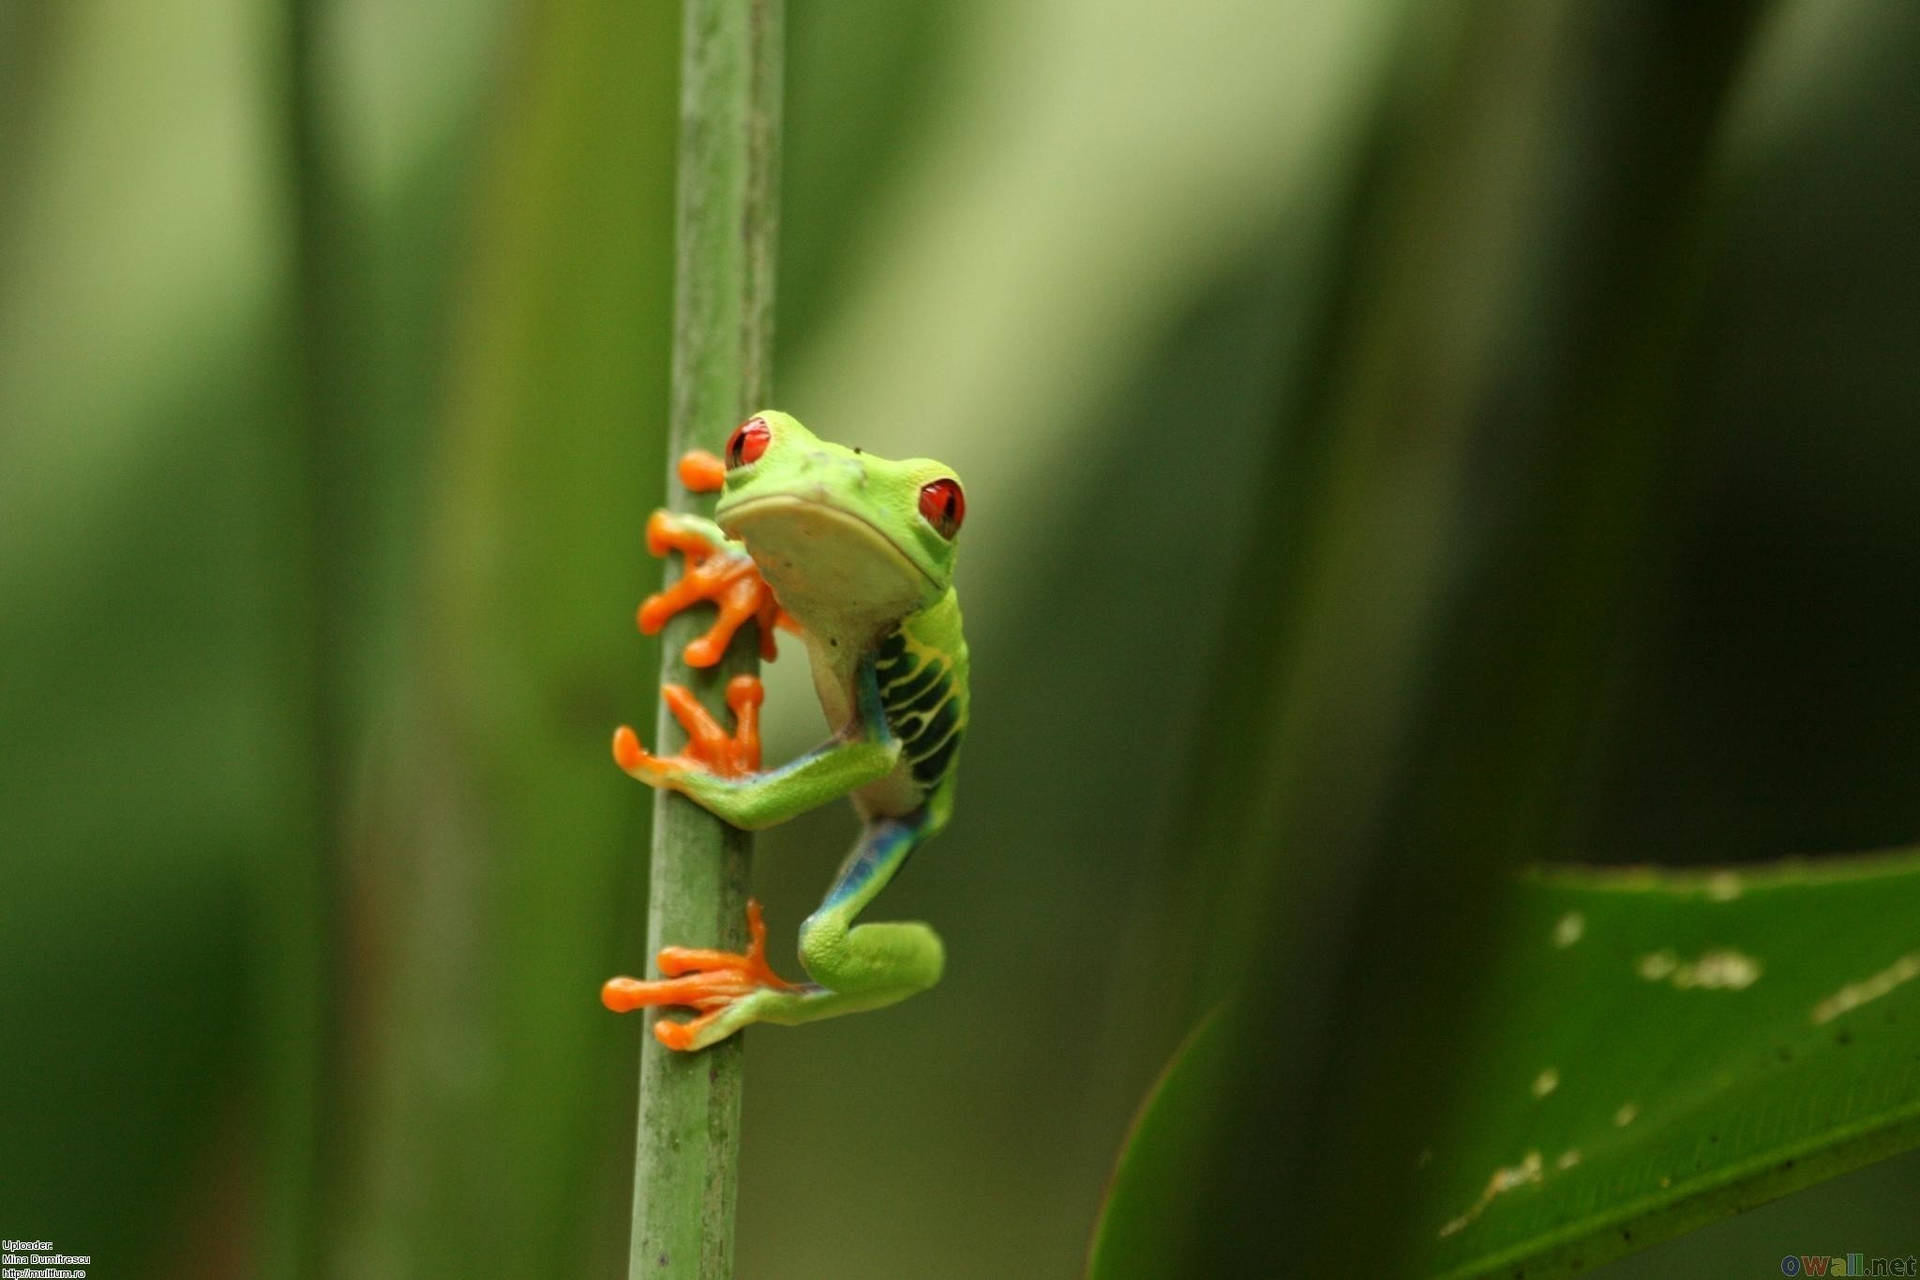 Climbing Red-Eyed Kawaii Frog Wallpaper